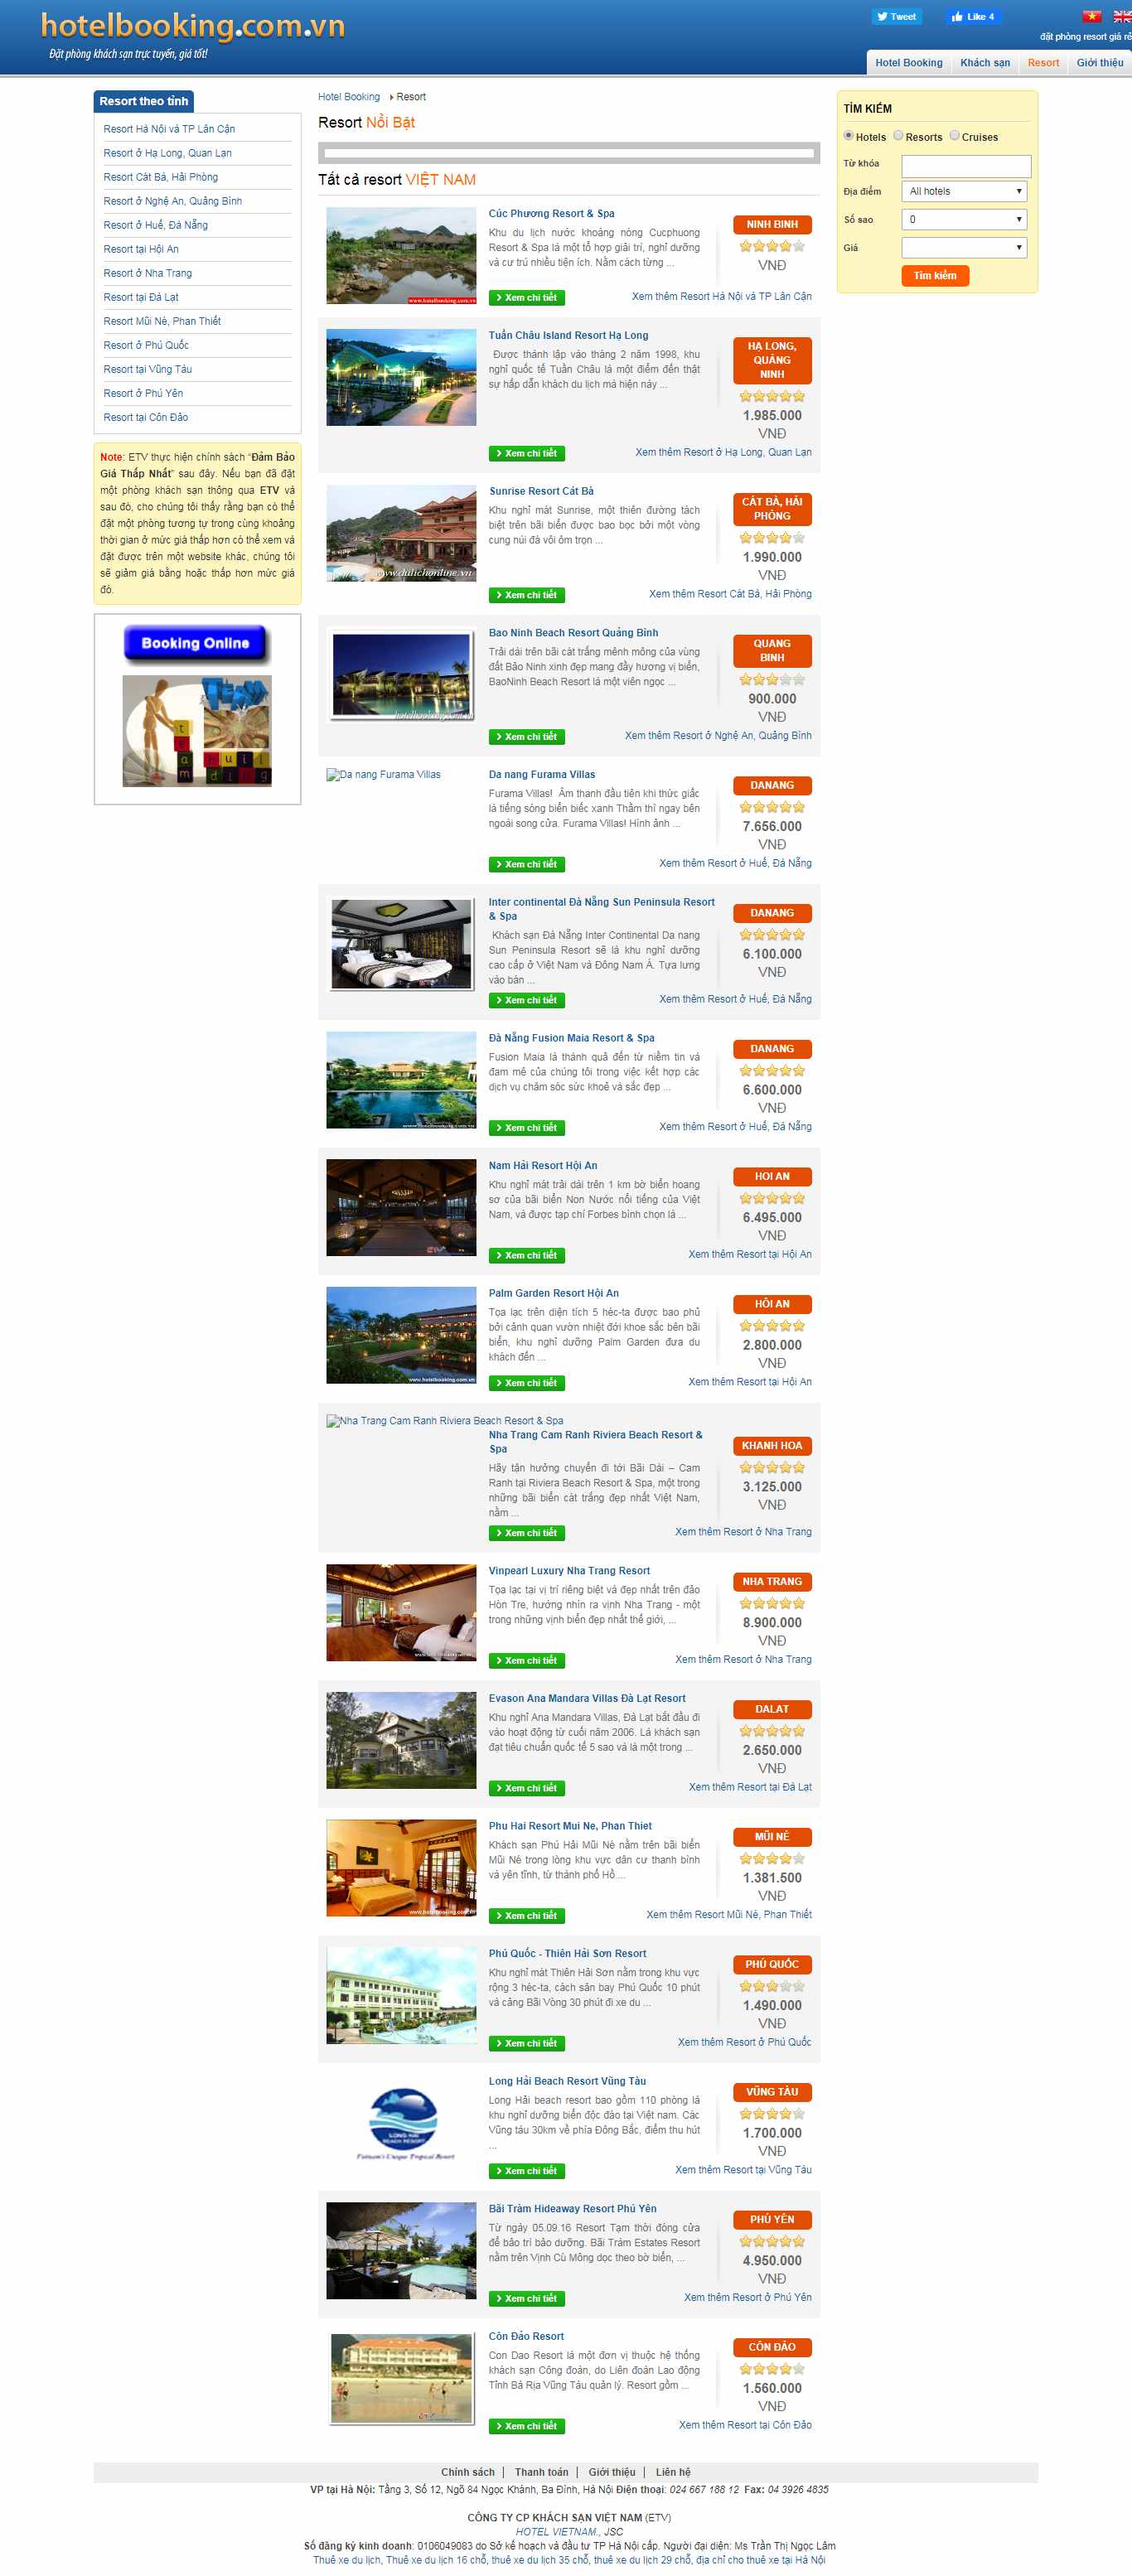 Thiết kế Website resort - www.hotelbooking.com.vn